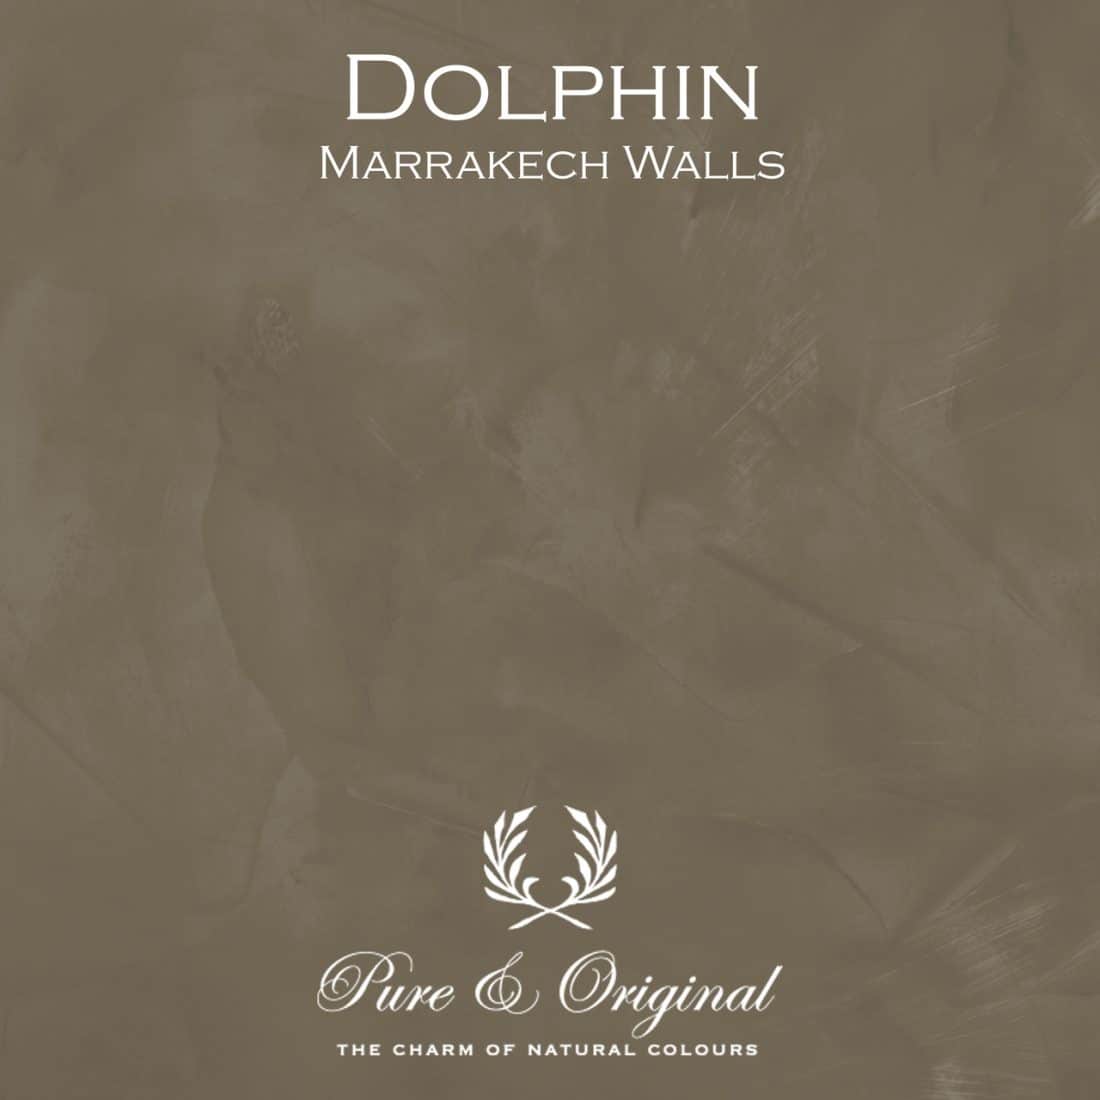 Dolphin Marrakech Walls Pure Original